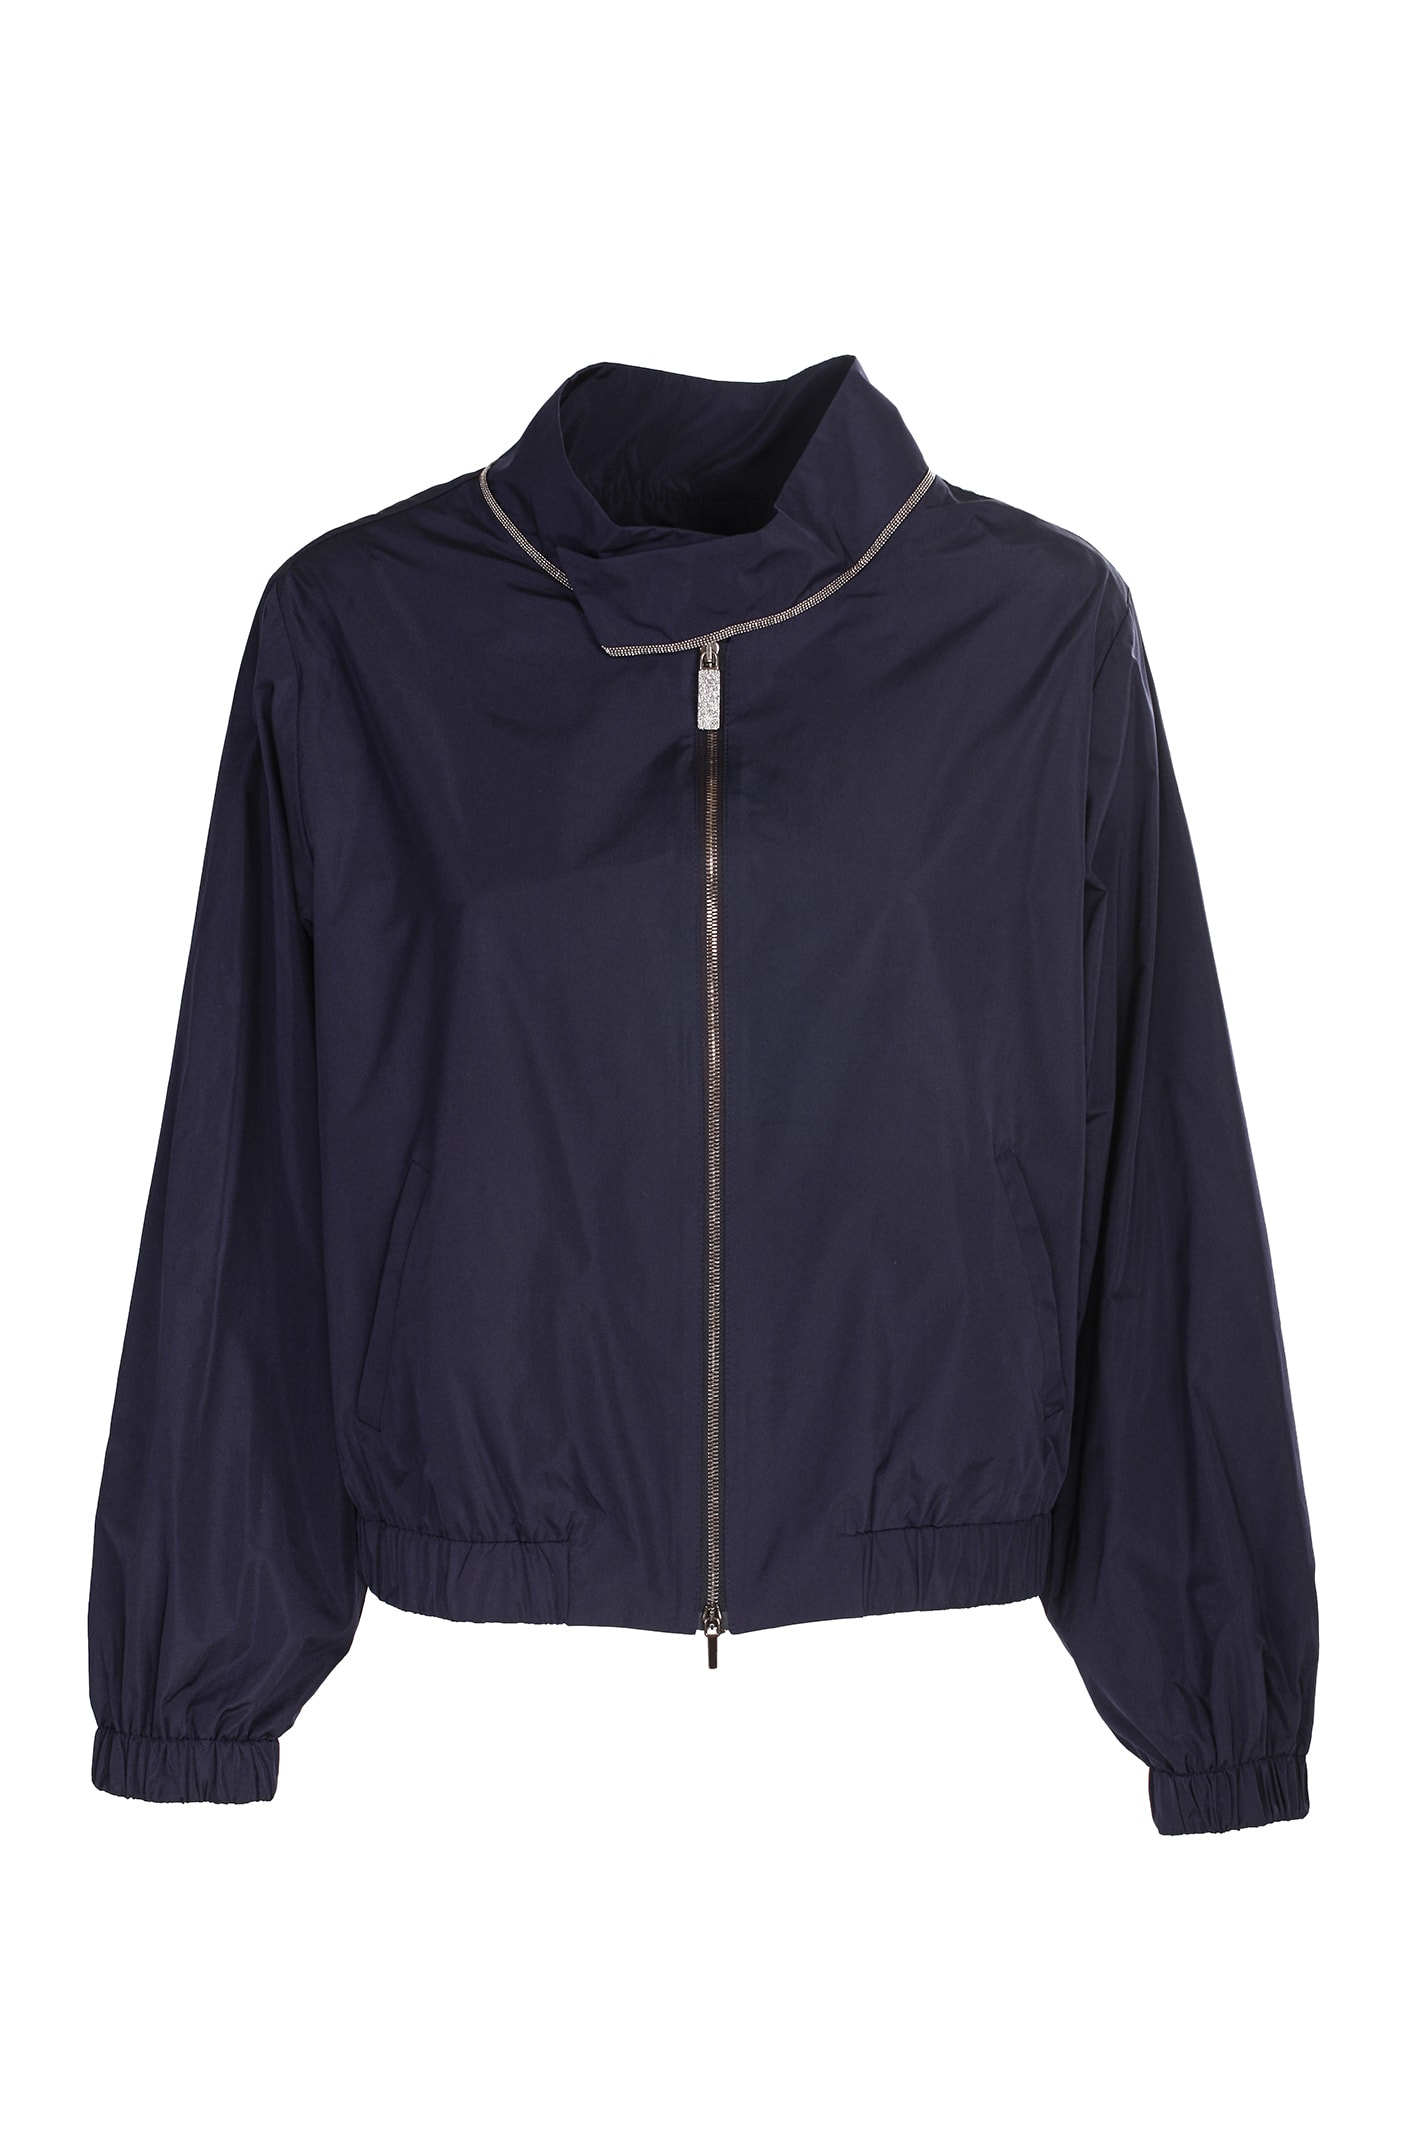 Photo of  Fabiana Filippi Jacket- shop Fabiana Filippi jackets online sales